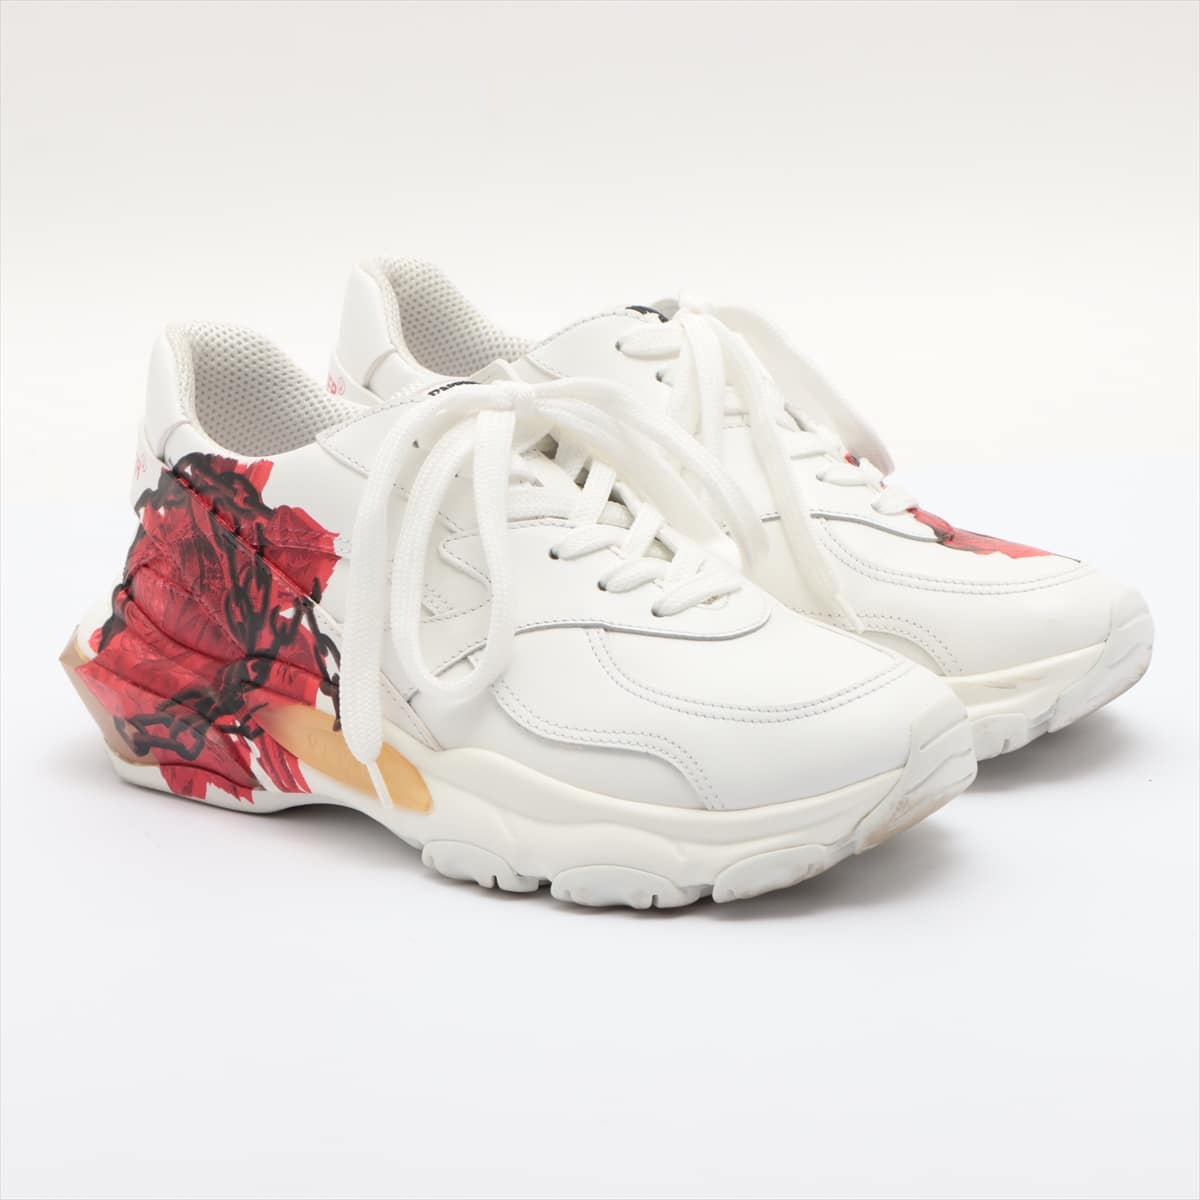 Valentino Garavani x Undercover Leather Sneakers 36 Ladies' White rose print